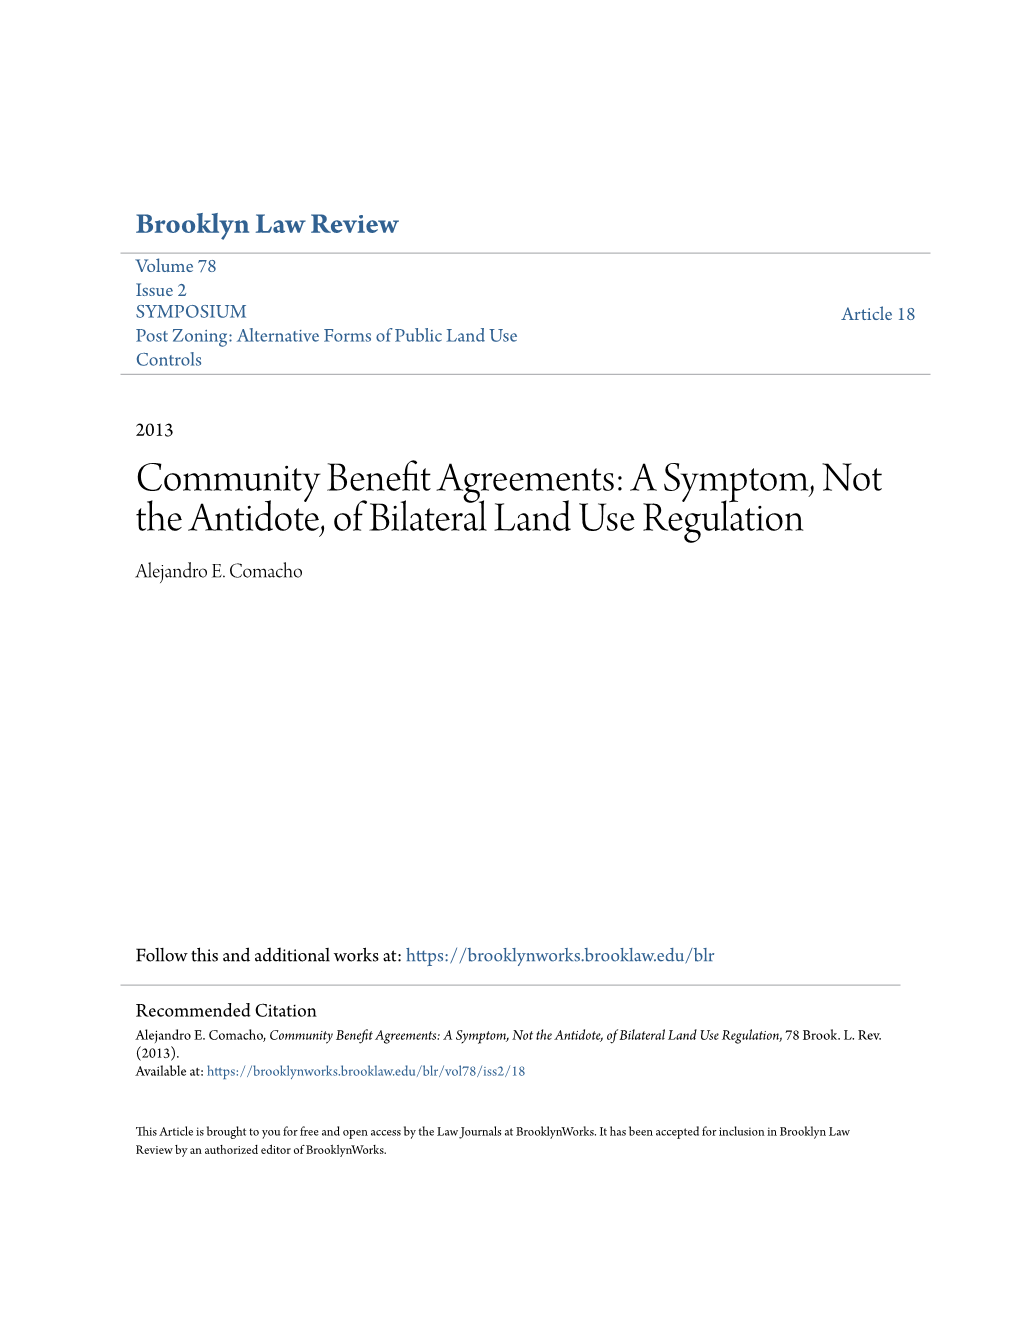 Community Benefit Agreements: a Symptom, Not the Antidote, of Bilateral Land Use Regulation Alejandro E